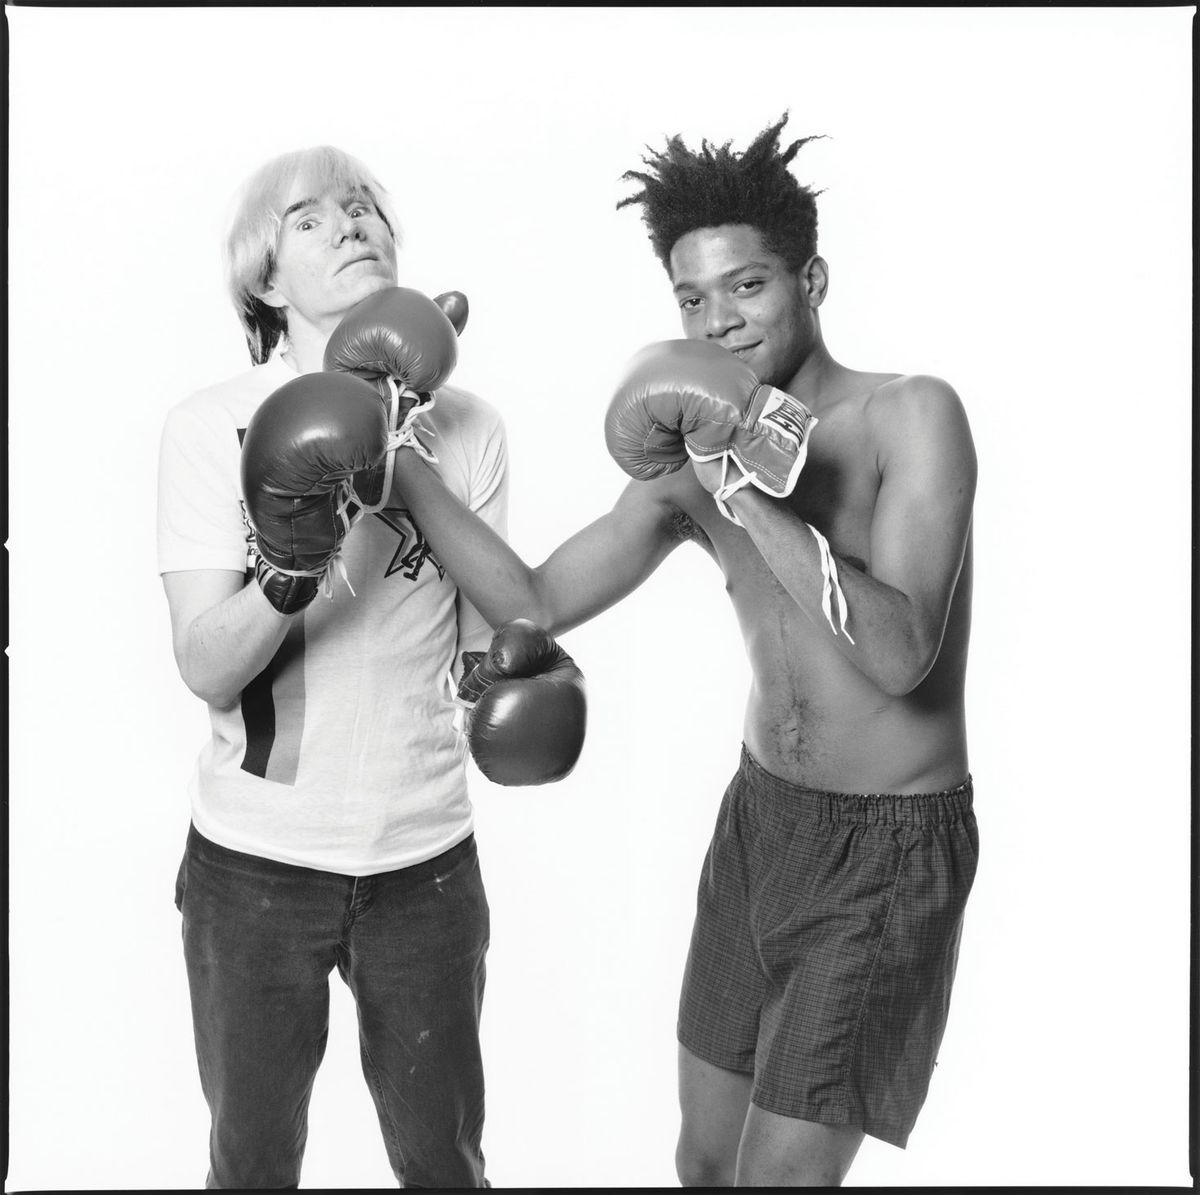 Basquiat x Warhol, Painting Four Hands at Fondation Louis Vuitton